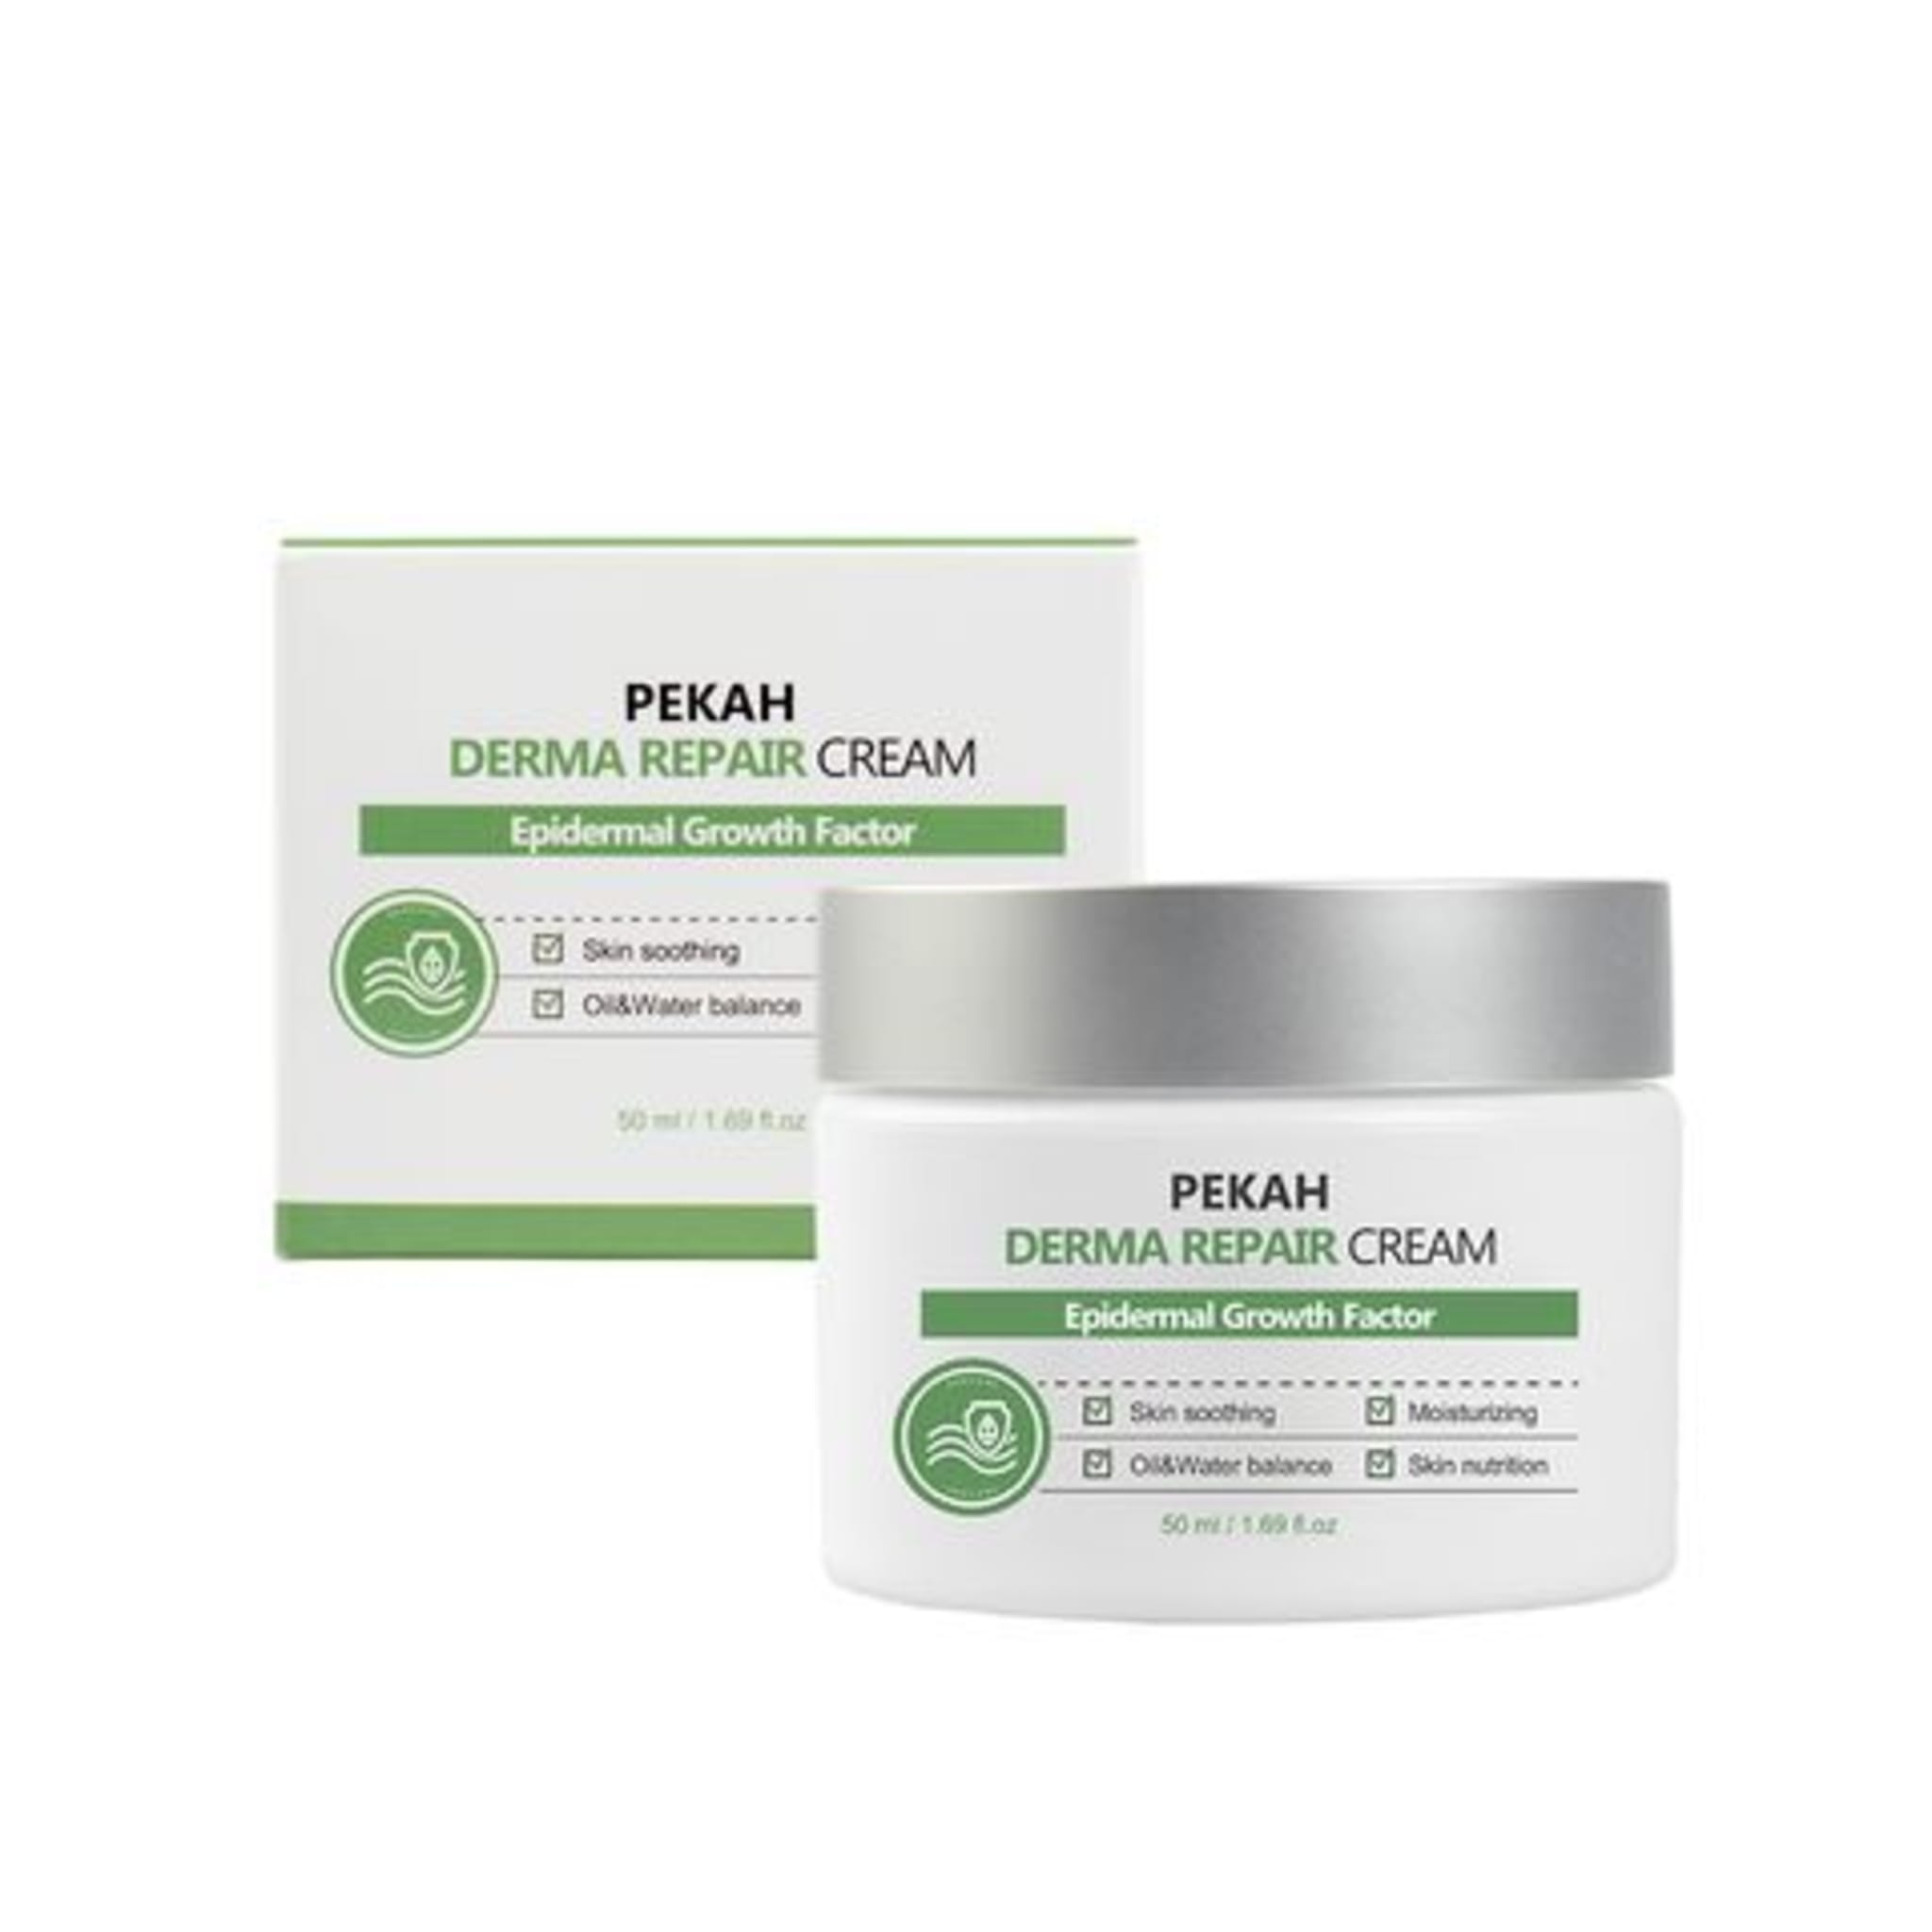 Kem dưỡng phục hồi da hư tổn (da mụn) Pekah - PEKAH derma repair cream - Product image